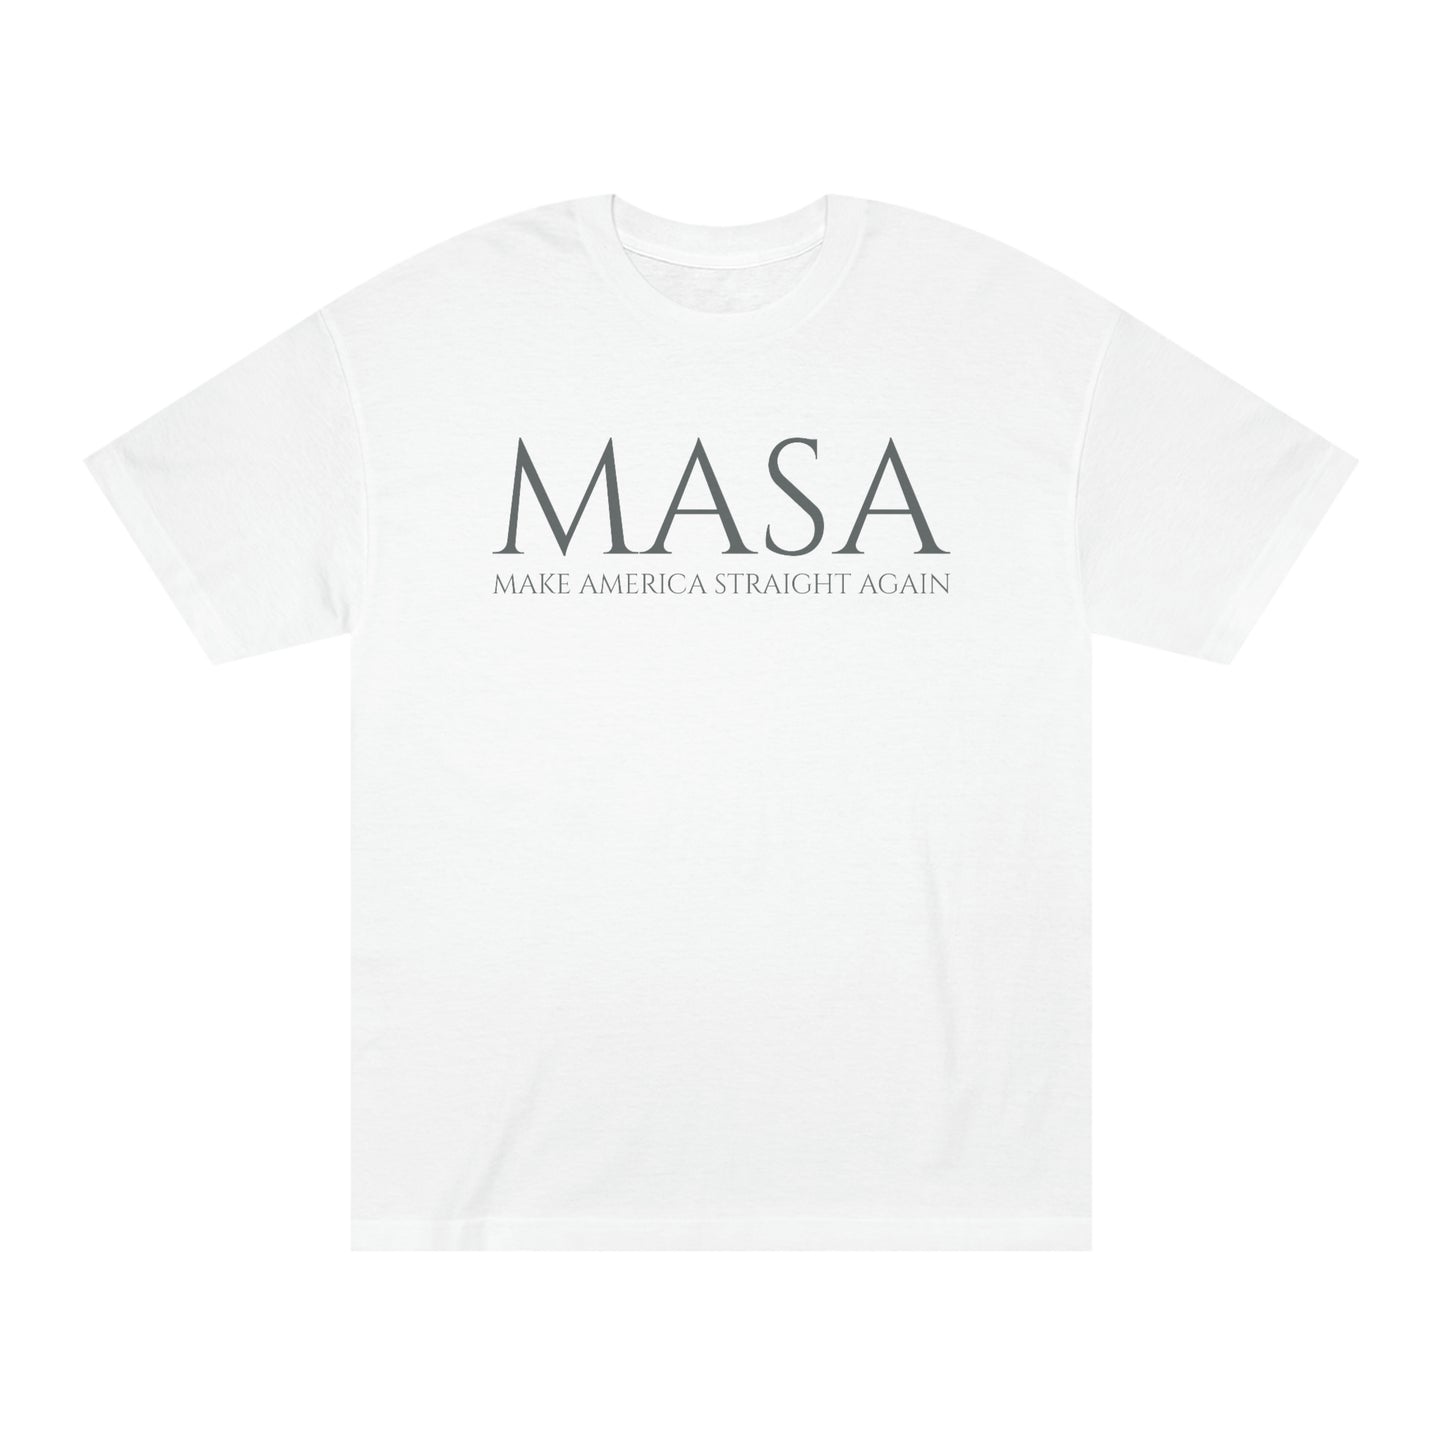 "MASA - Make America Straight Again" Unisex Classic Tee